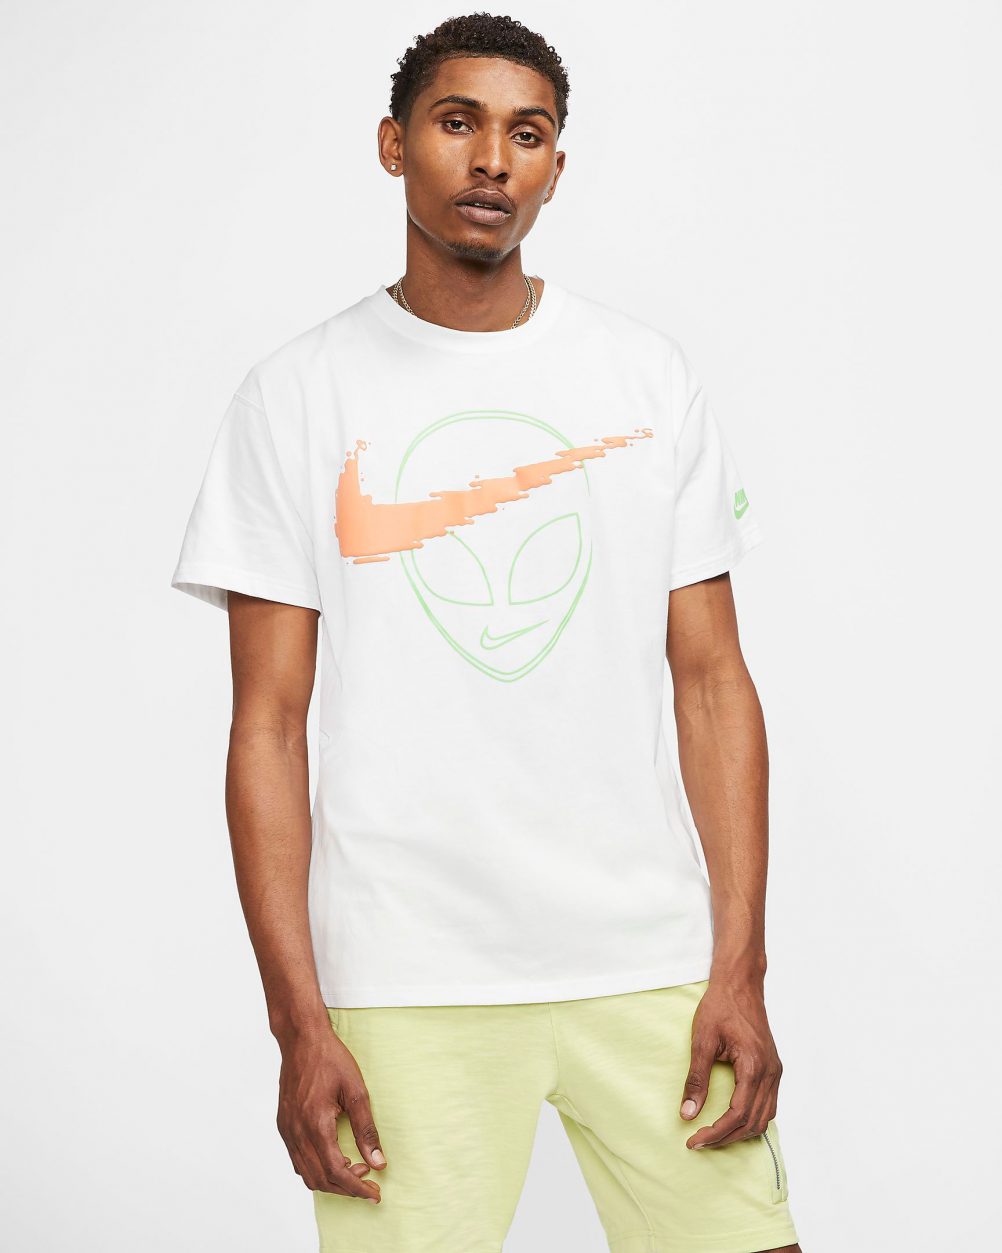 Nike Sportswear Alien Shirts and Shorts | SneakerFits.com